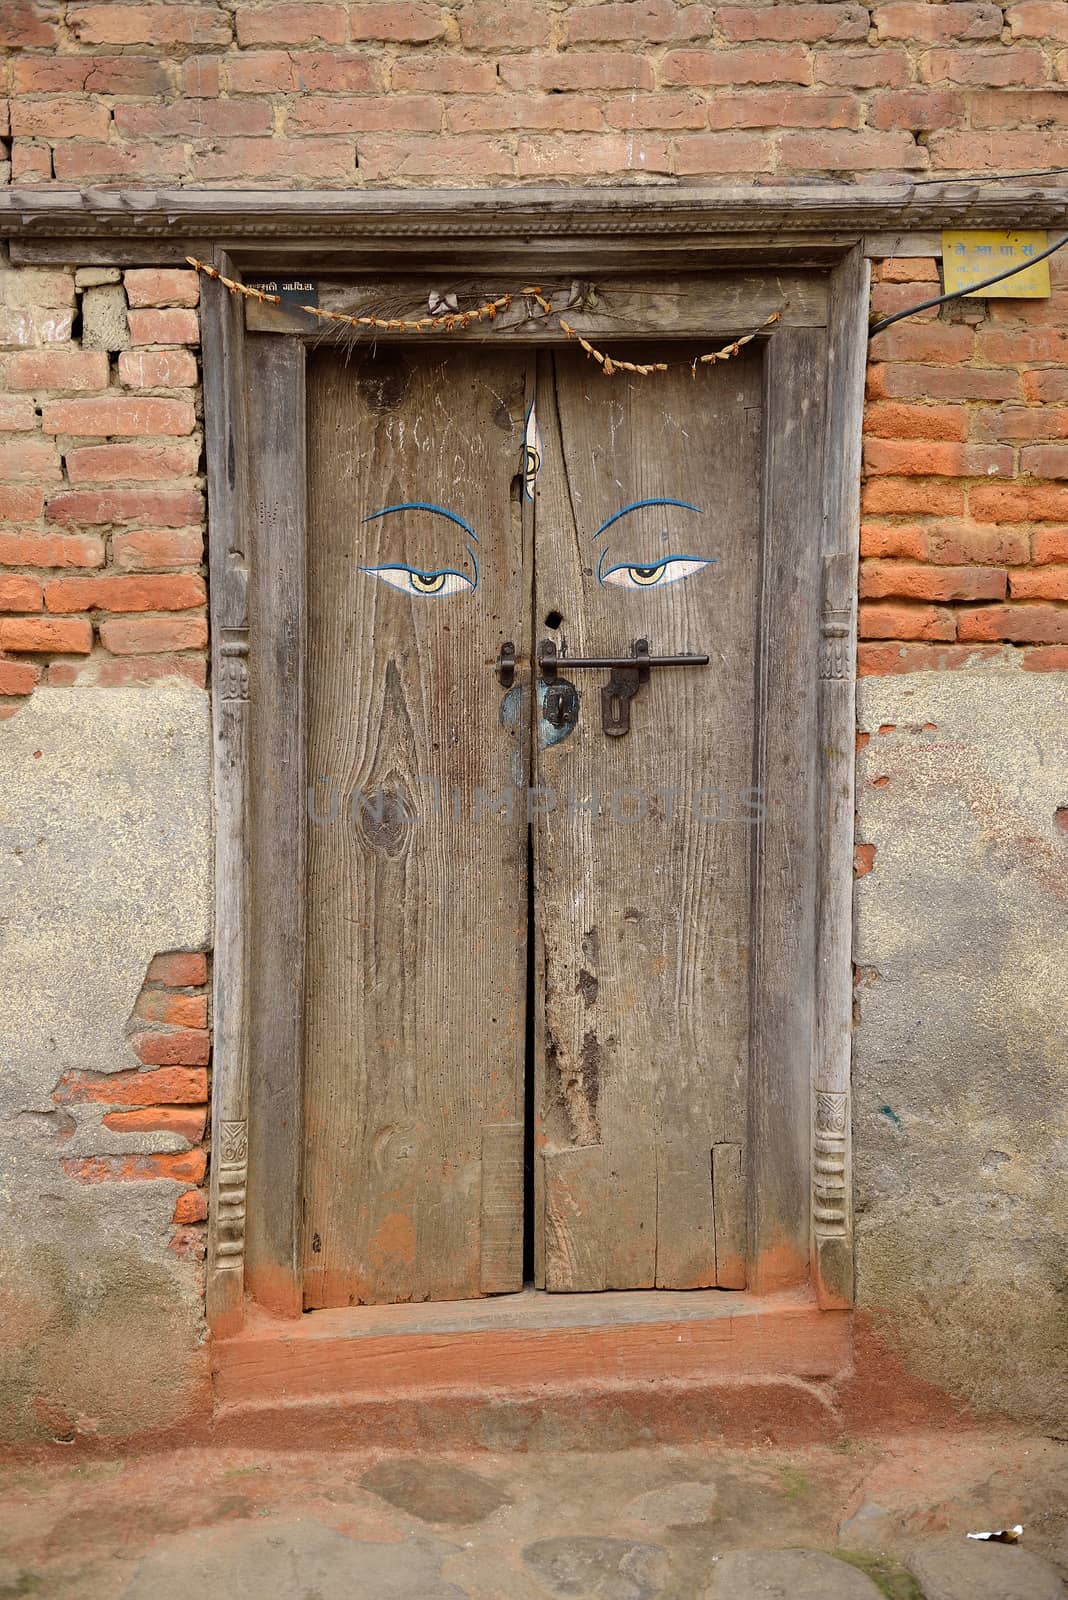 The door at Kokhana Village, Kathmandu, Nepal